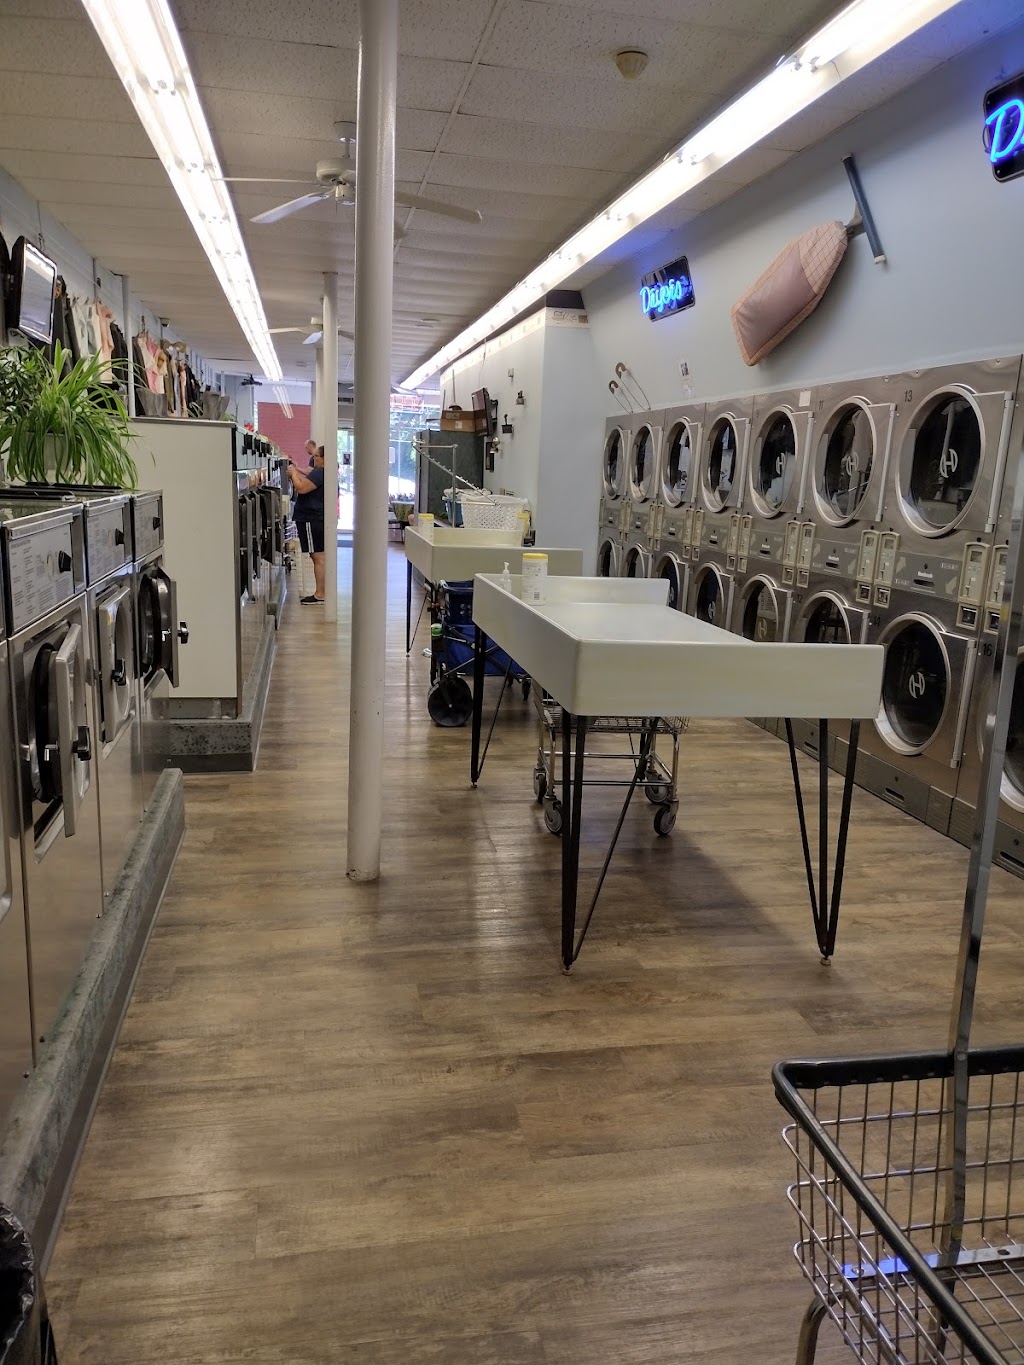 Weve Got Your Sock Laundromat | 702 Freedom Plains Rd, Poughkeepsie, NY 12603 | Phone: (845) 204-9197